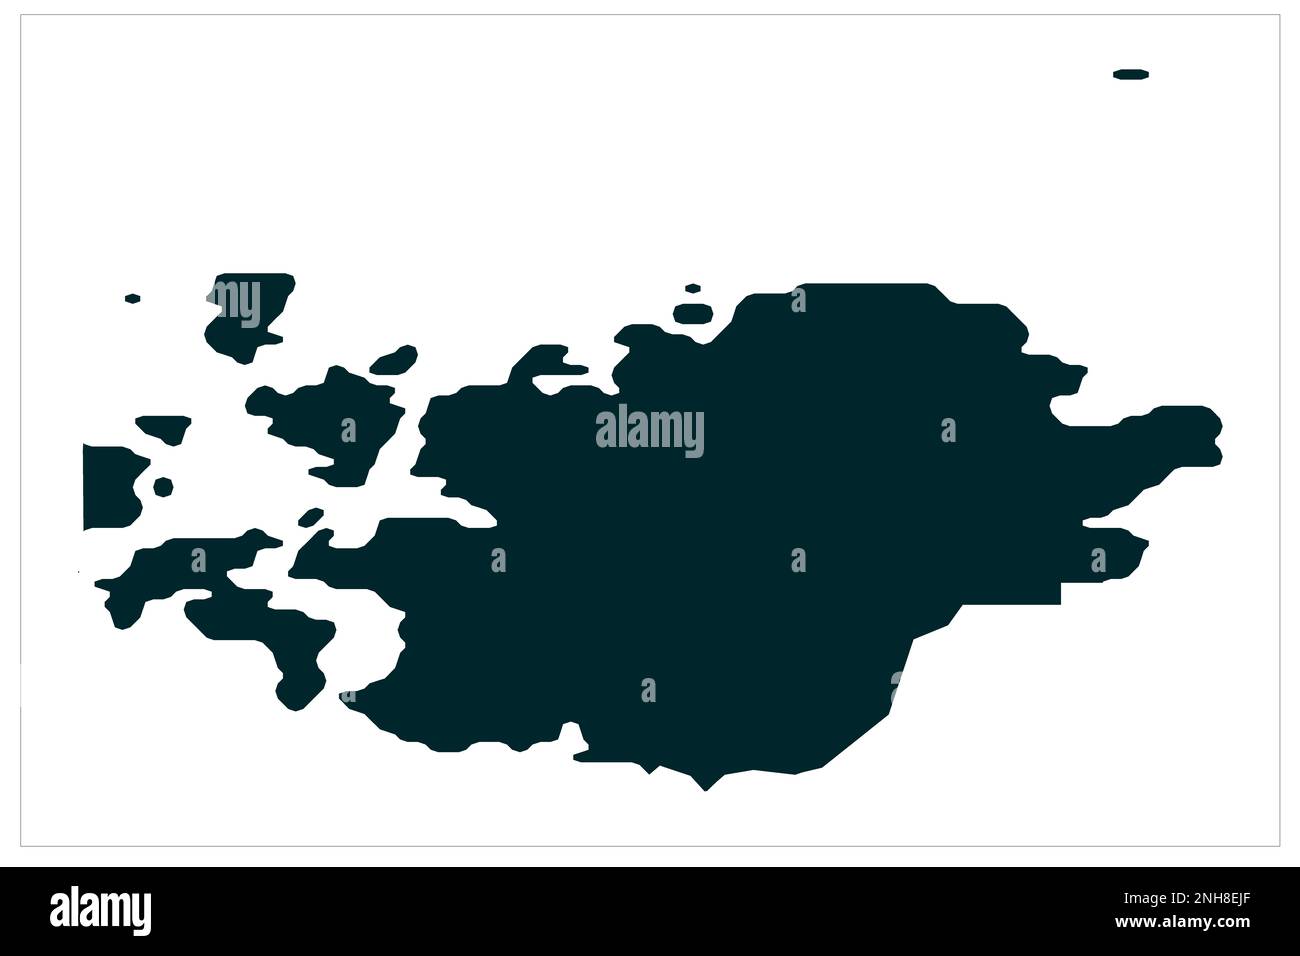 Geta Aland Island Kartendarstellung auf weißem Bckgorund, Geta Kartendarstellung, Geta Municipality Aland Islands Stockfoto